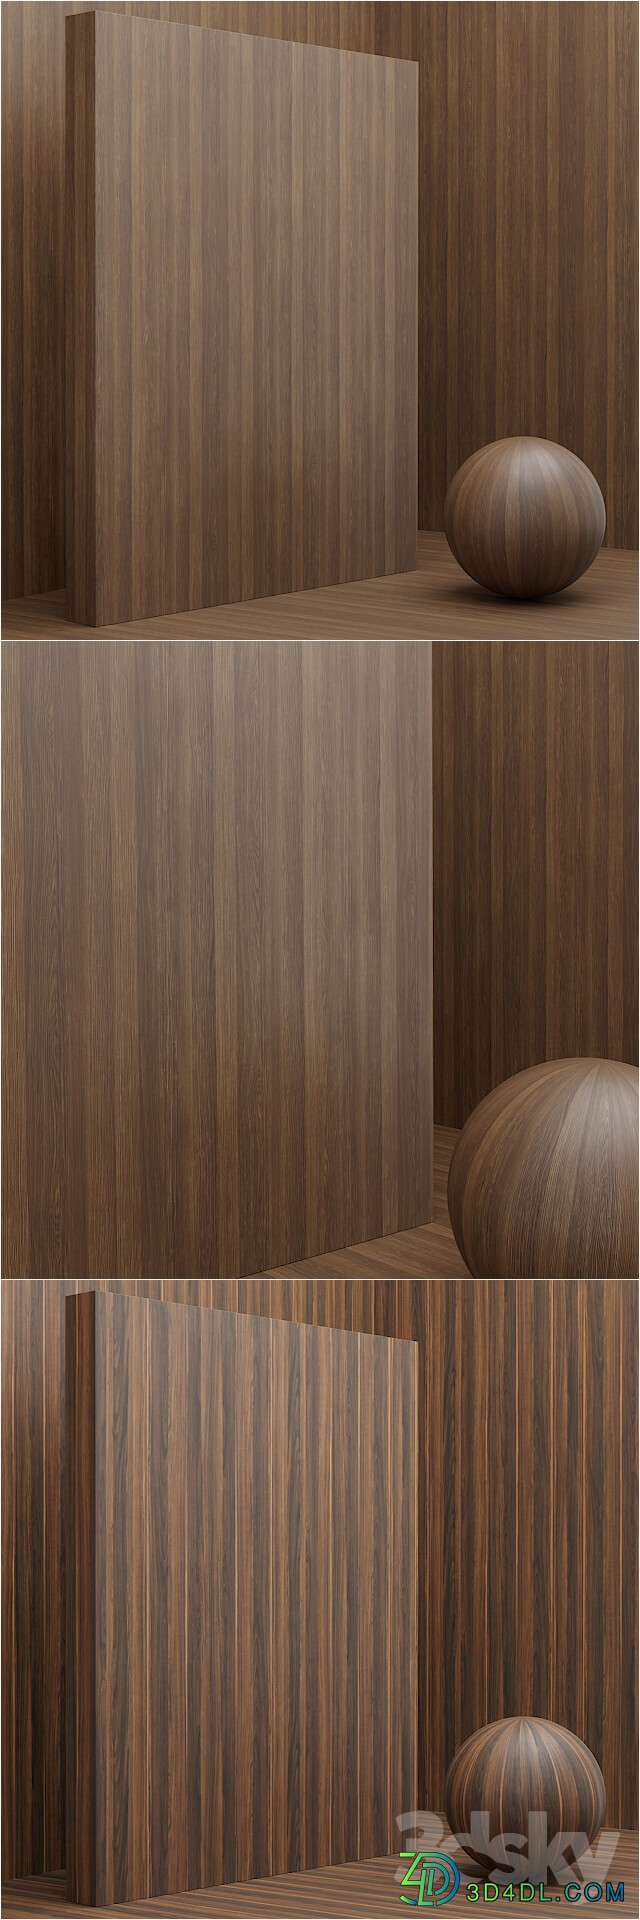 Material wood veneer seamless set 11